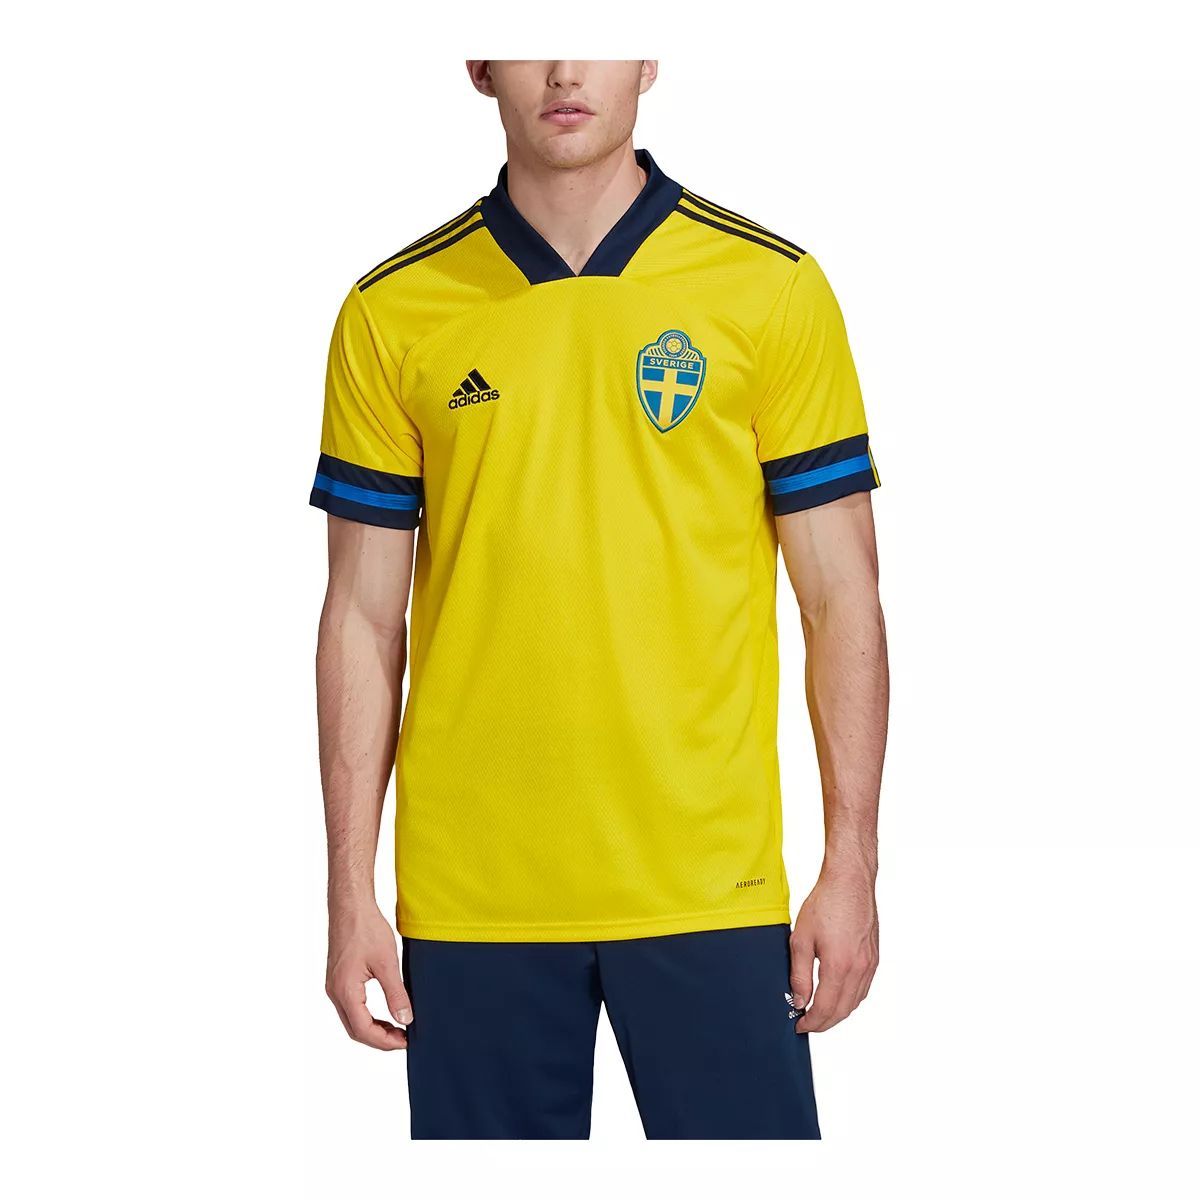 Sweden 2020 adidas Men's Replica Soccer Jersey, Football